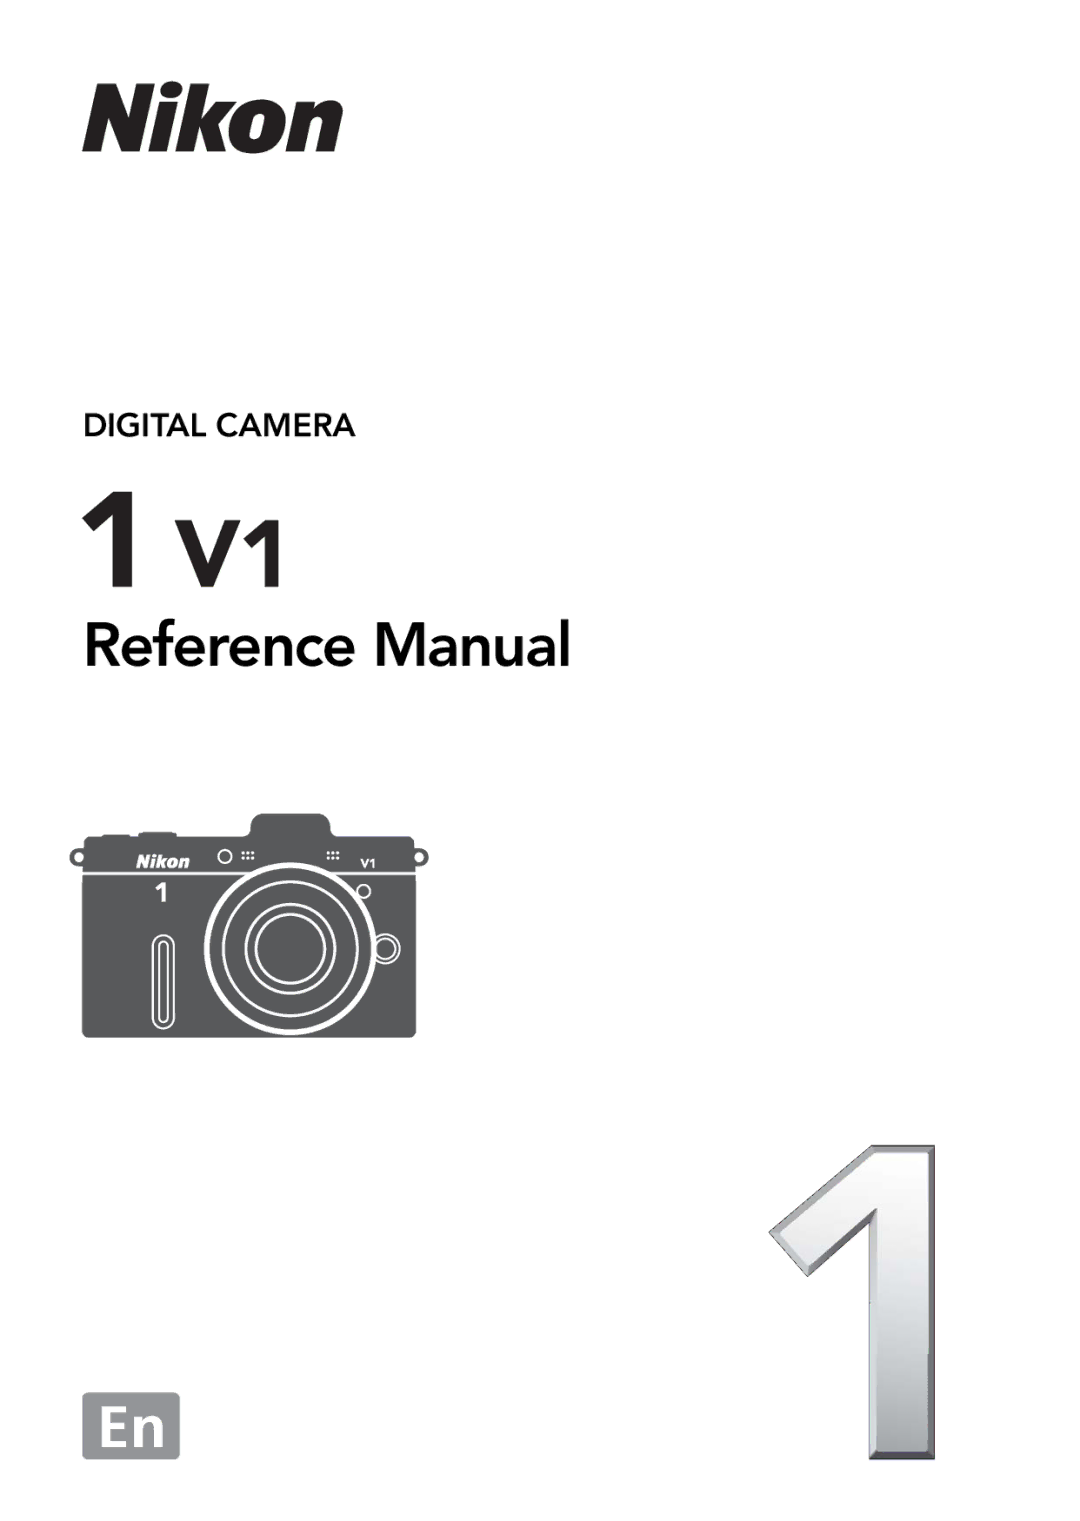 Nikon V1 manual Reference Manual 